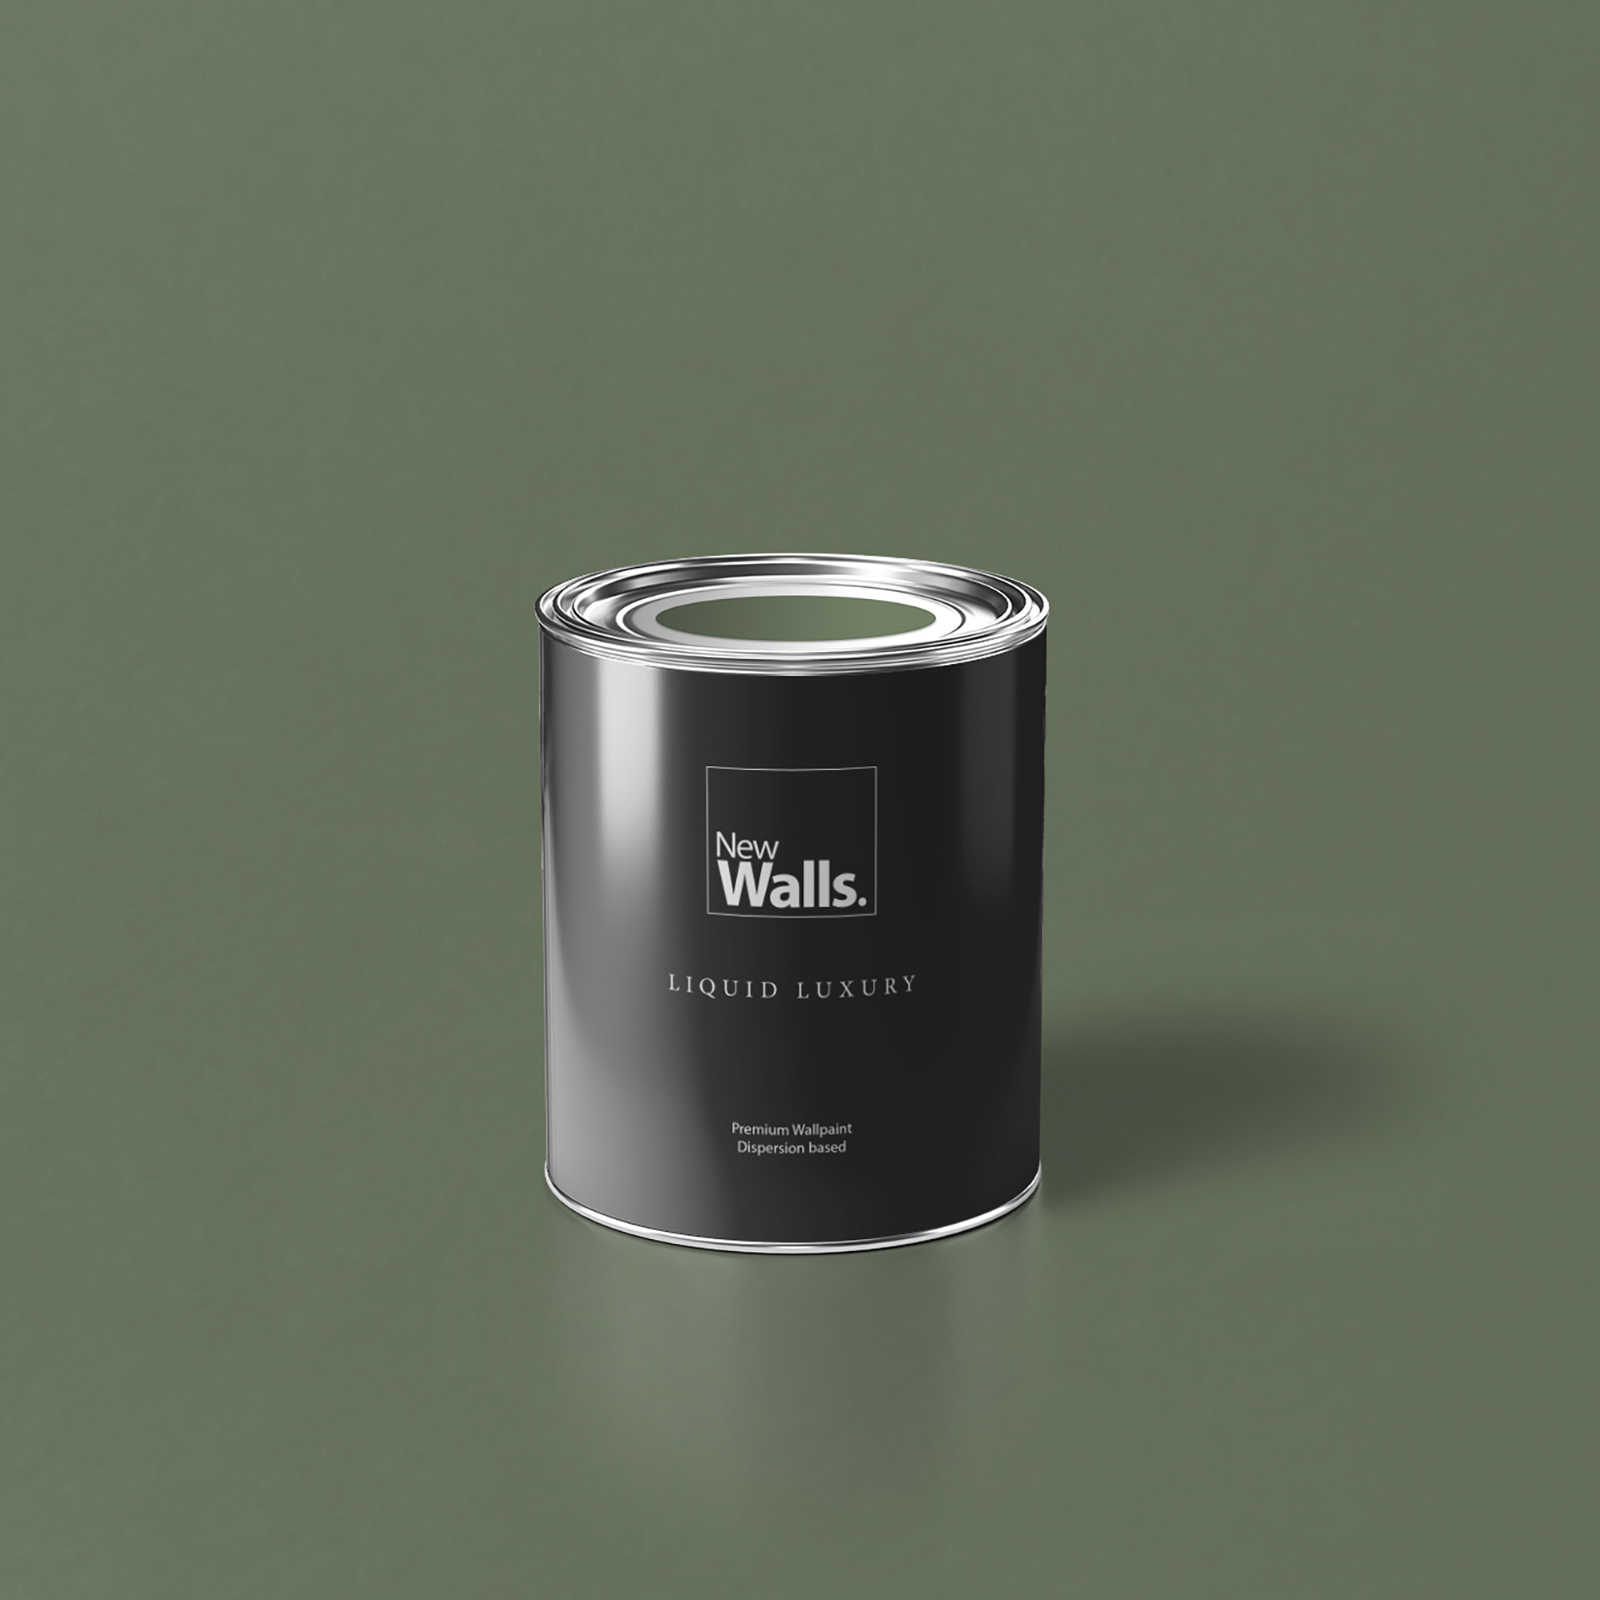             Premium Wandfarbe entspannendes Olivgrün »Gorgeous Green« NW504 – 1 Liter
        